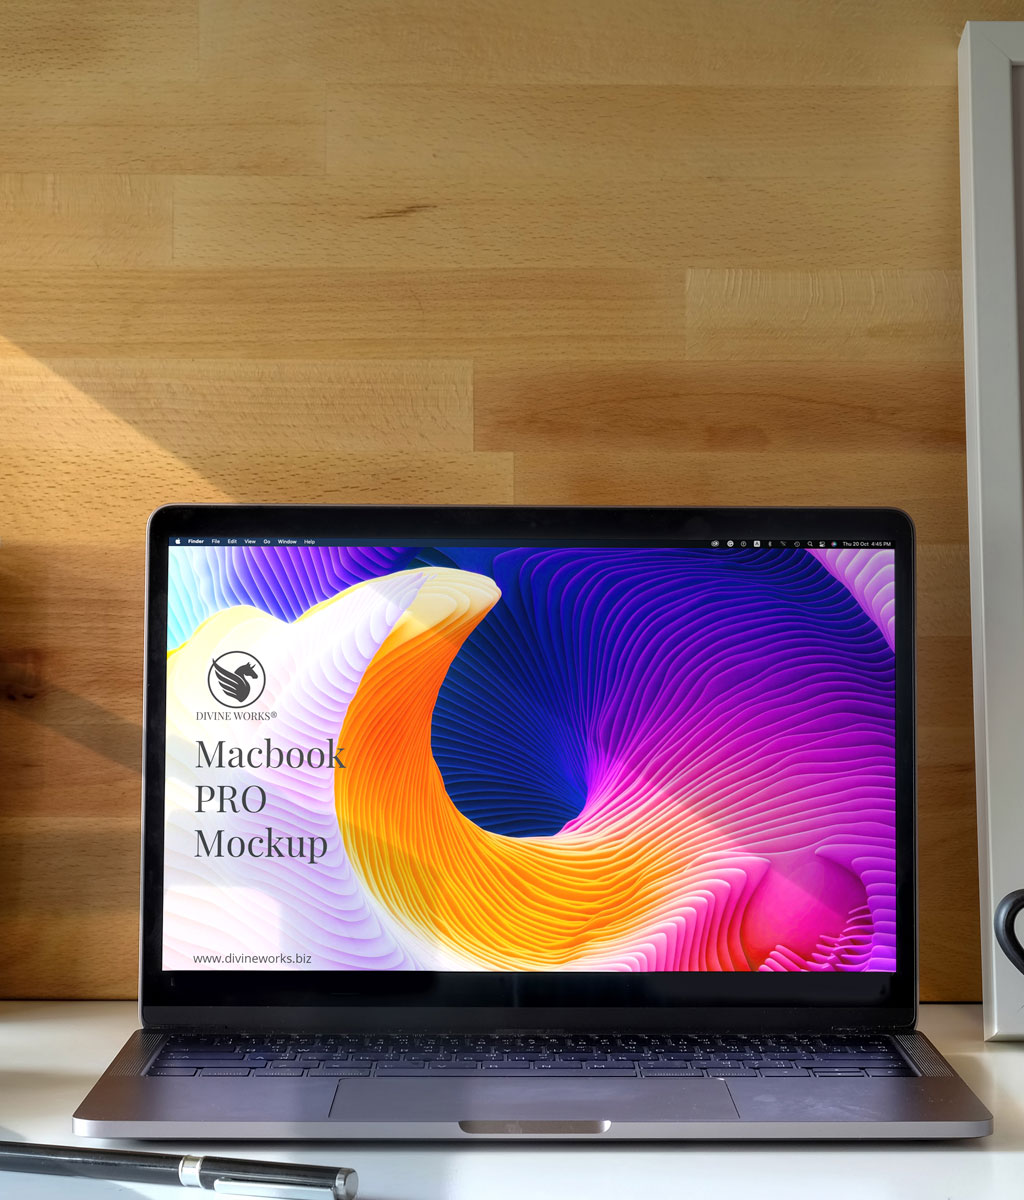 MacBook Pro Mockup Free Download